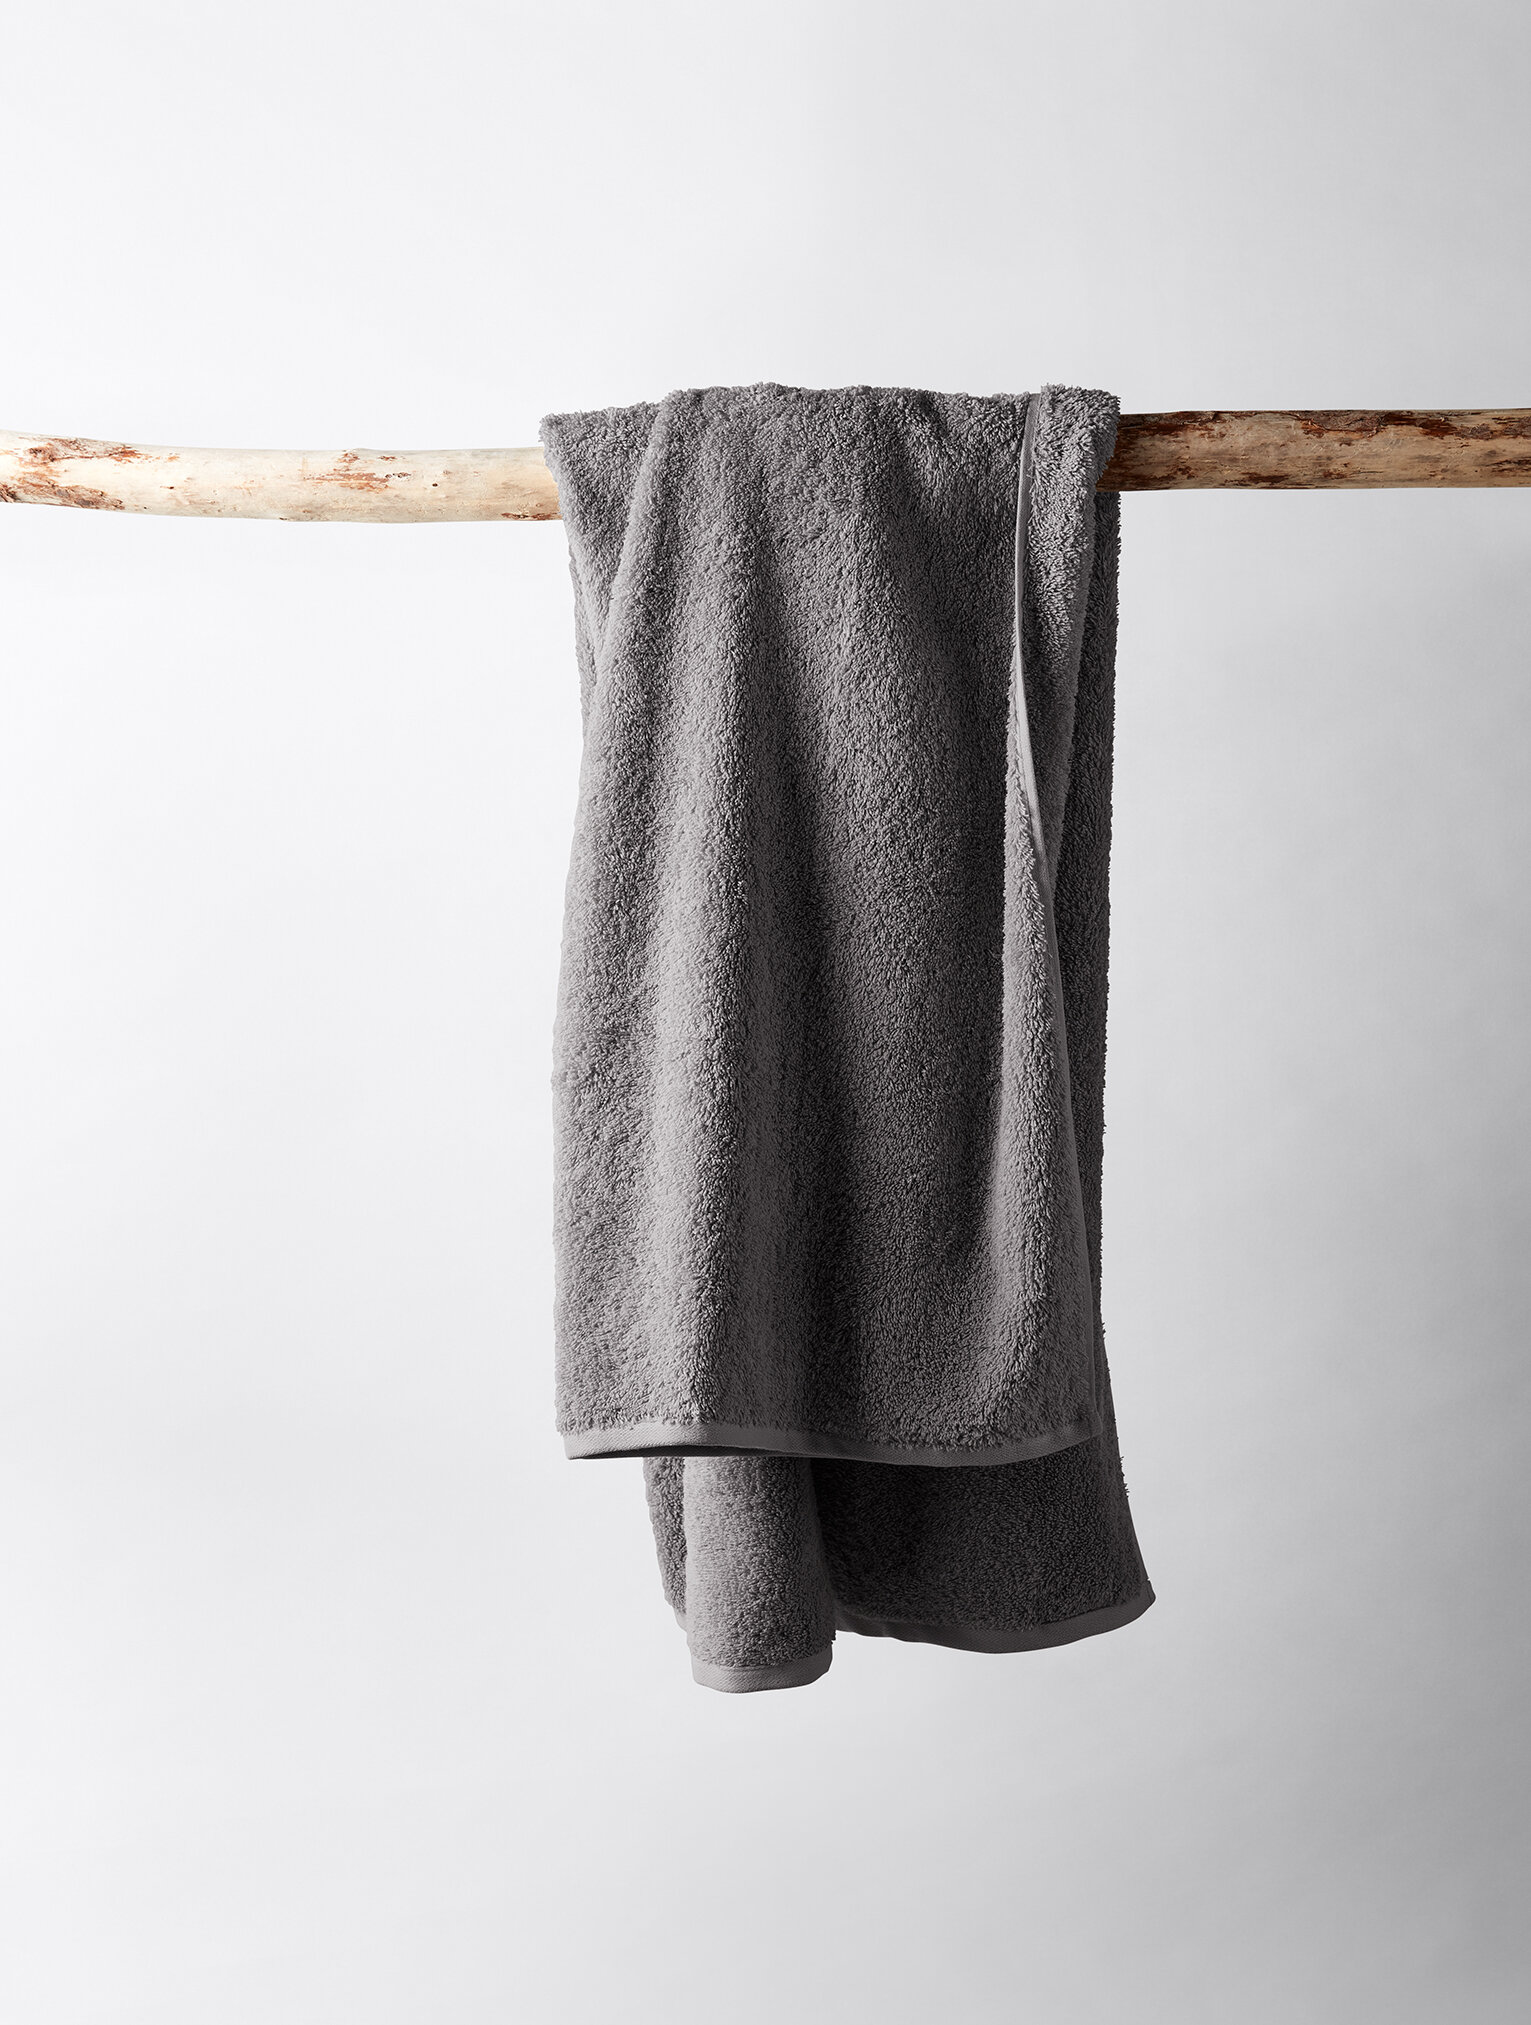 Coyuchi Cloud Loom 4-Piece Organic Cotton Bath Towel Set in Steel Blue